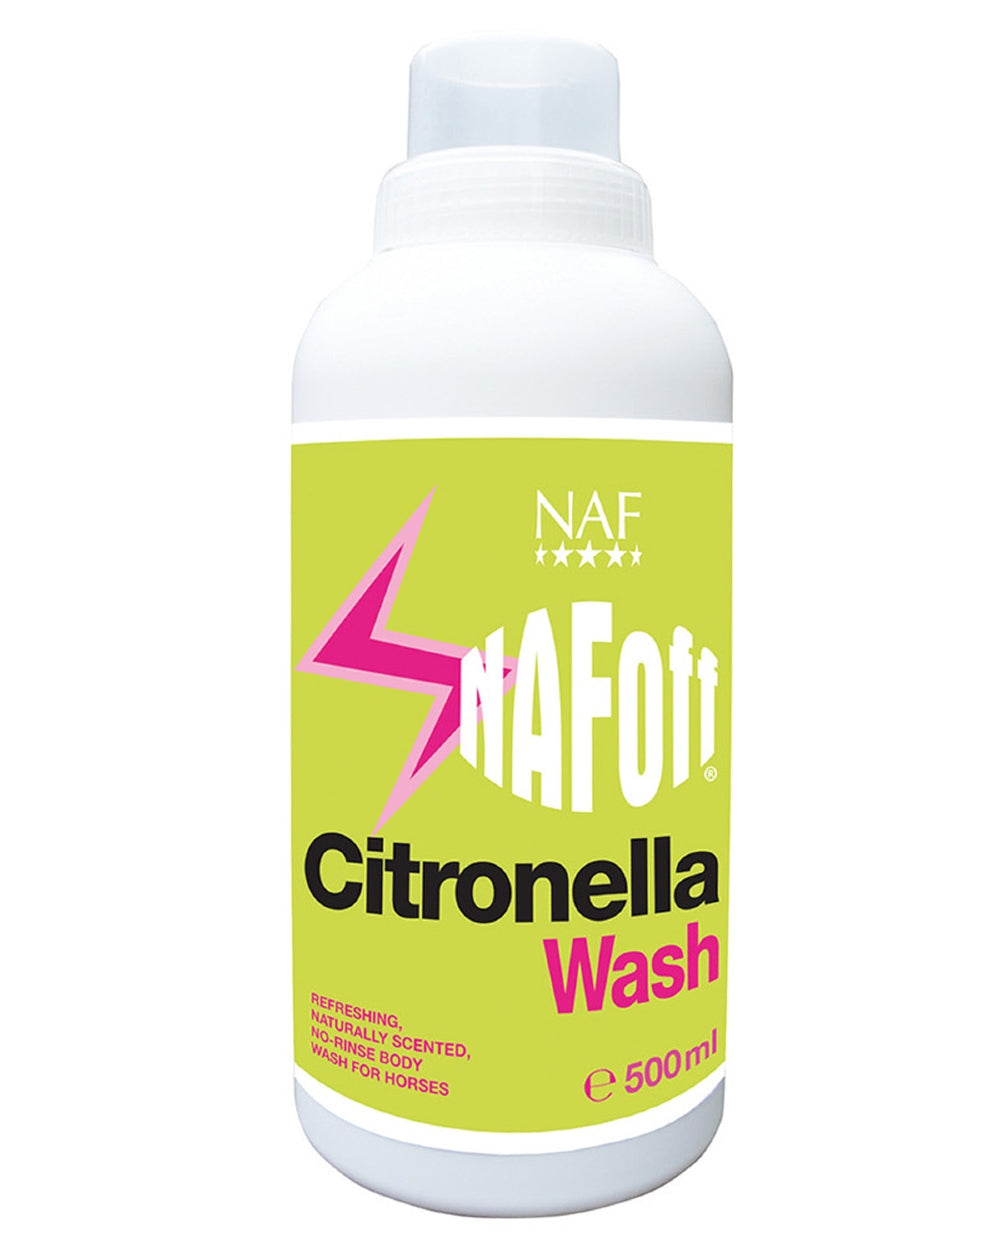 NAF Off Citronella Wash 500ml on white background